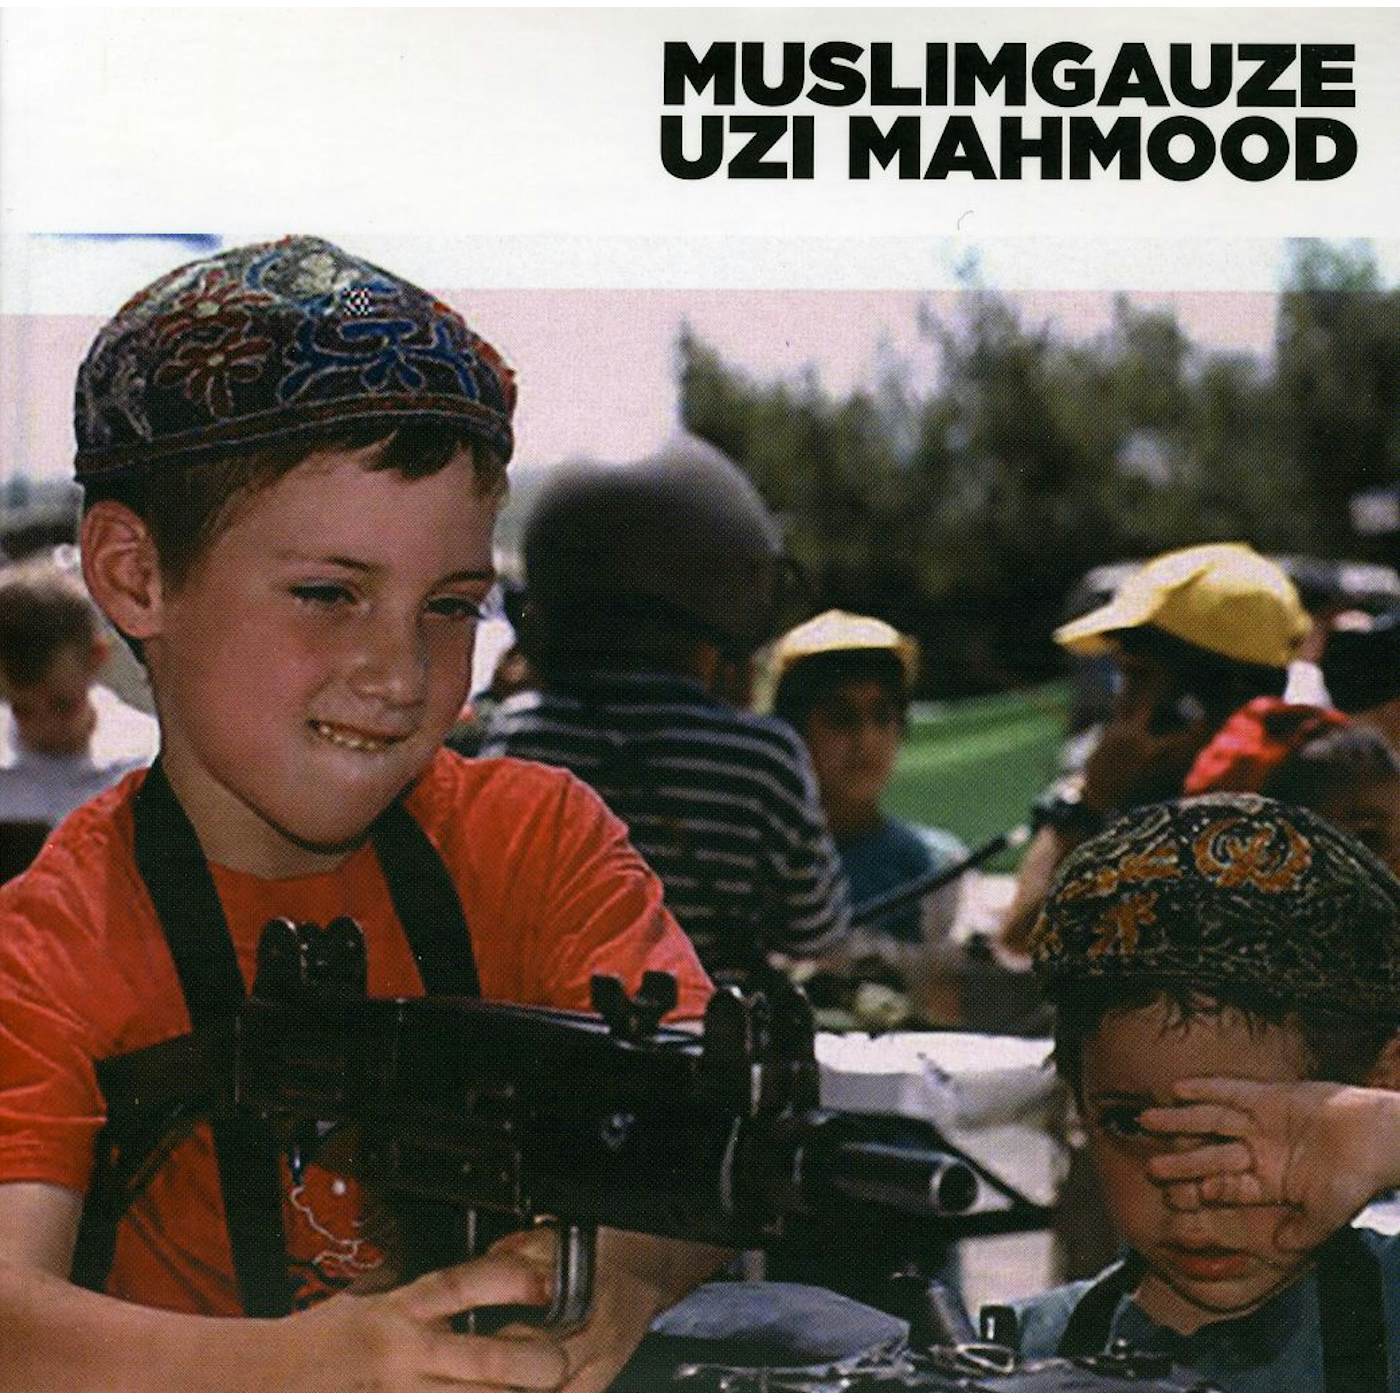 Muslimgauze UZI MAHMOOD CD